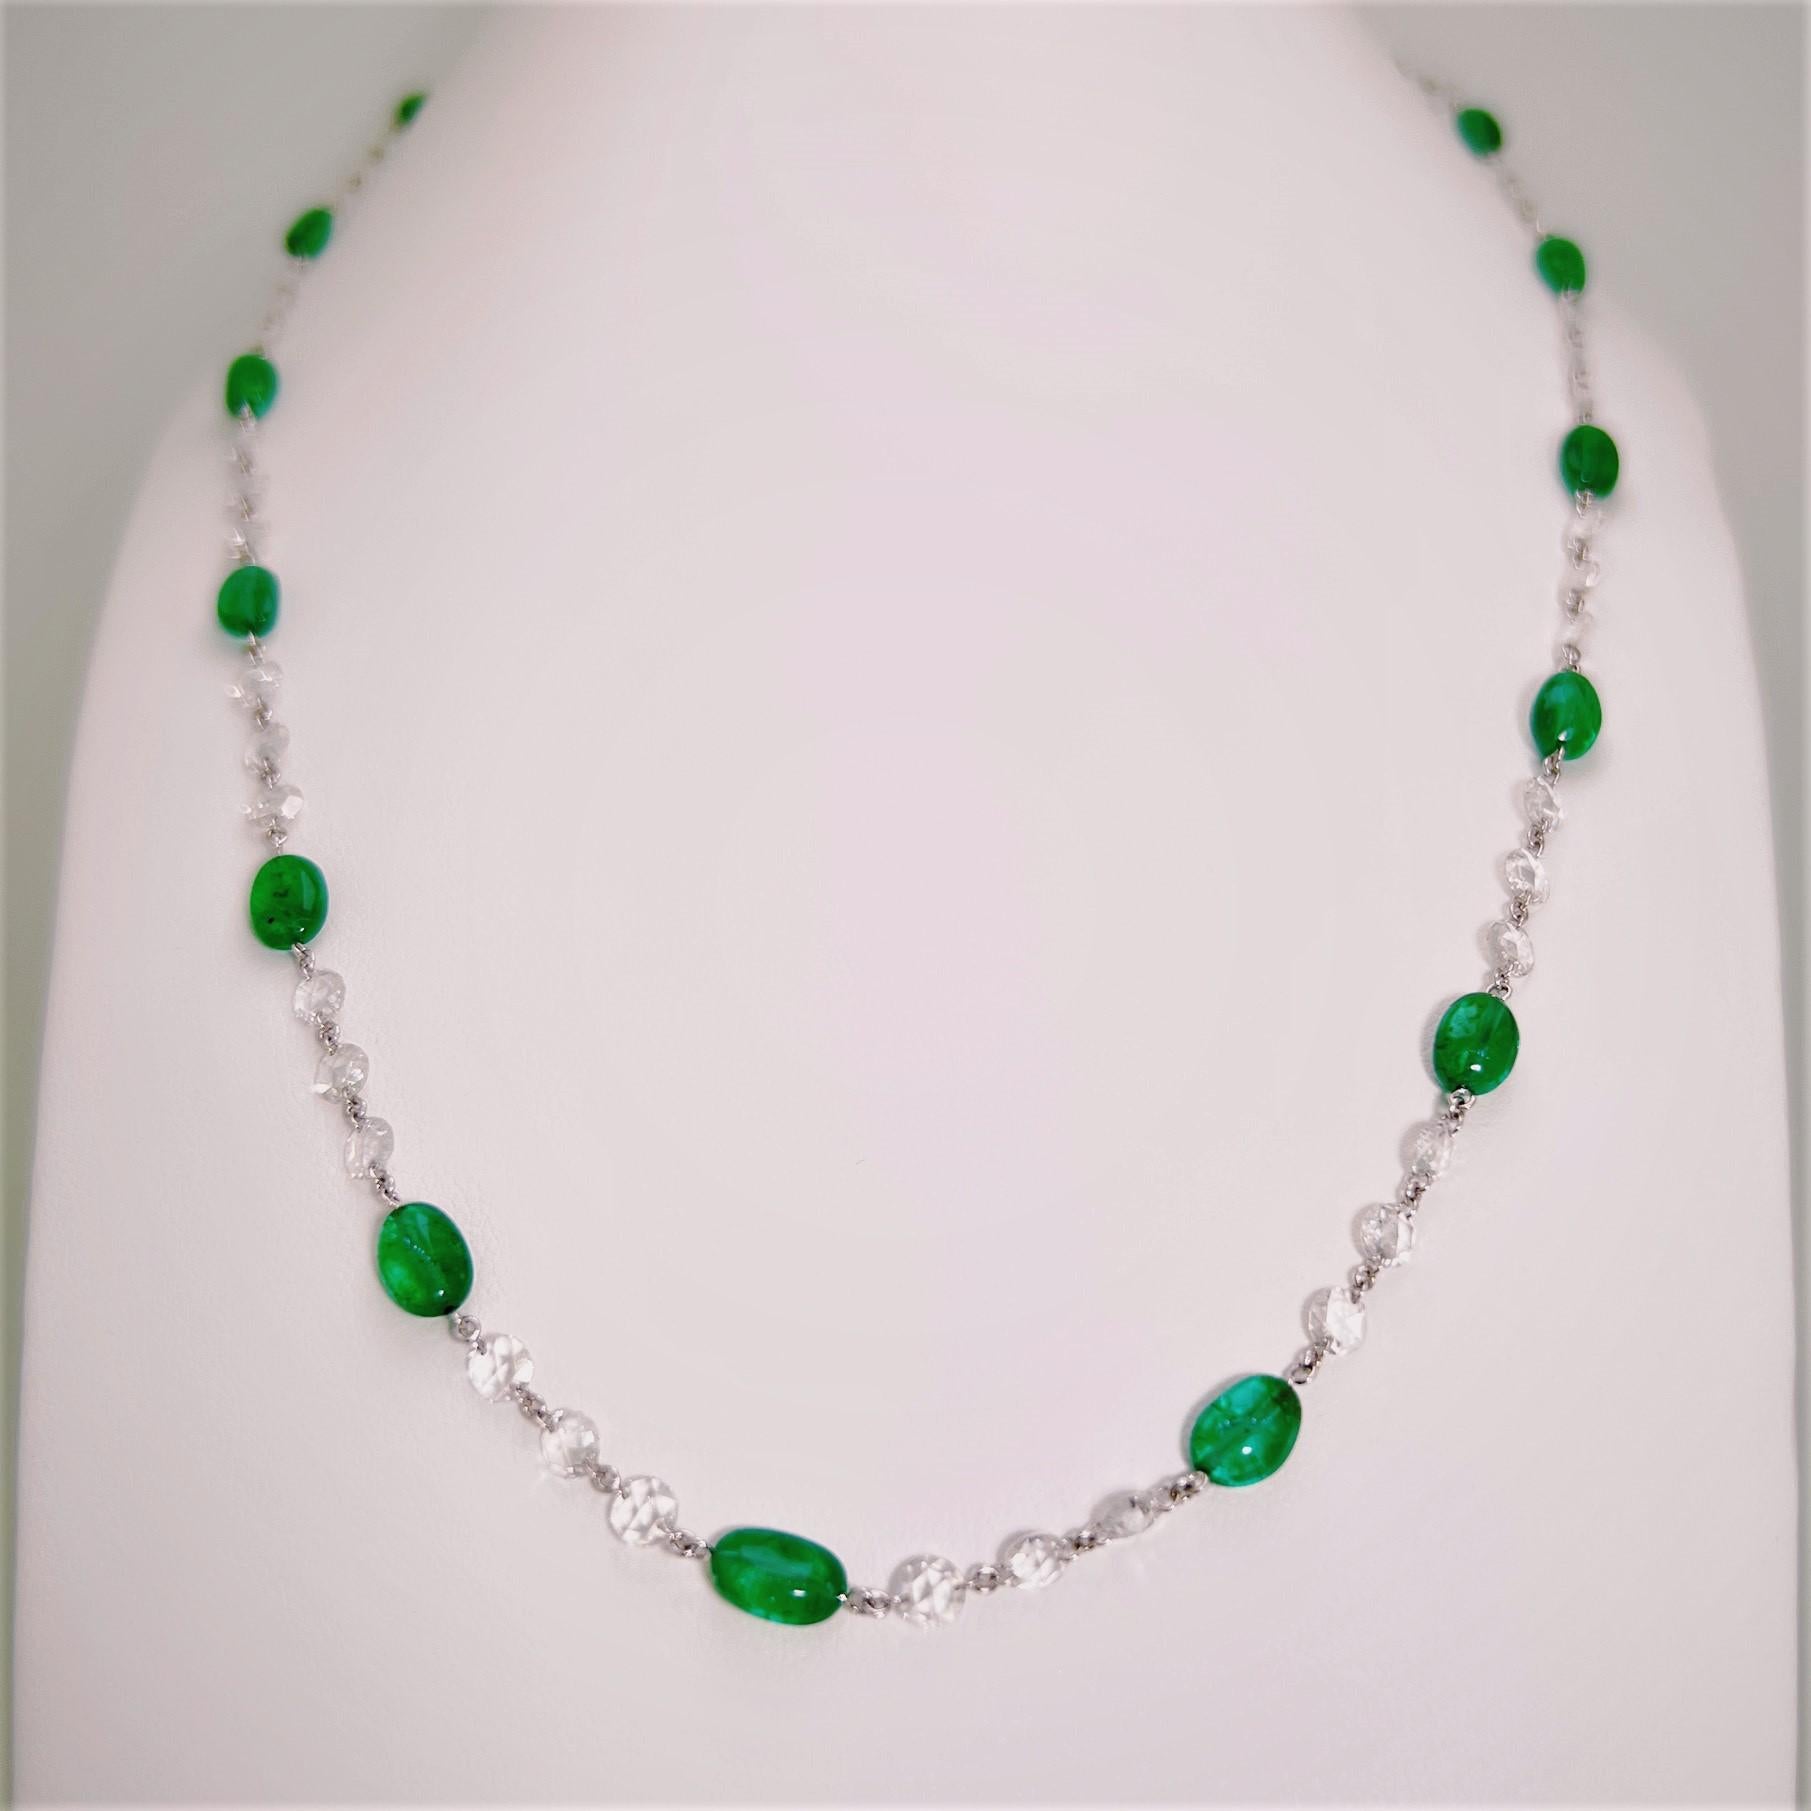 Uncut 34.24 Carat Emerald & Rose Cut Diamond Necklace / Bracelet on 18K White Gold For Sale